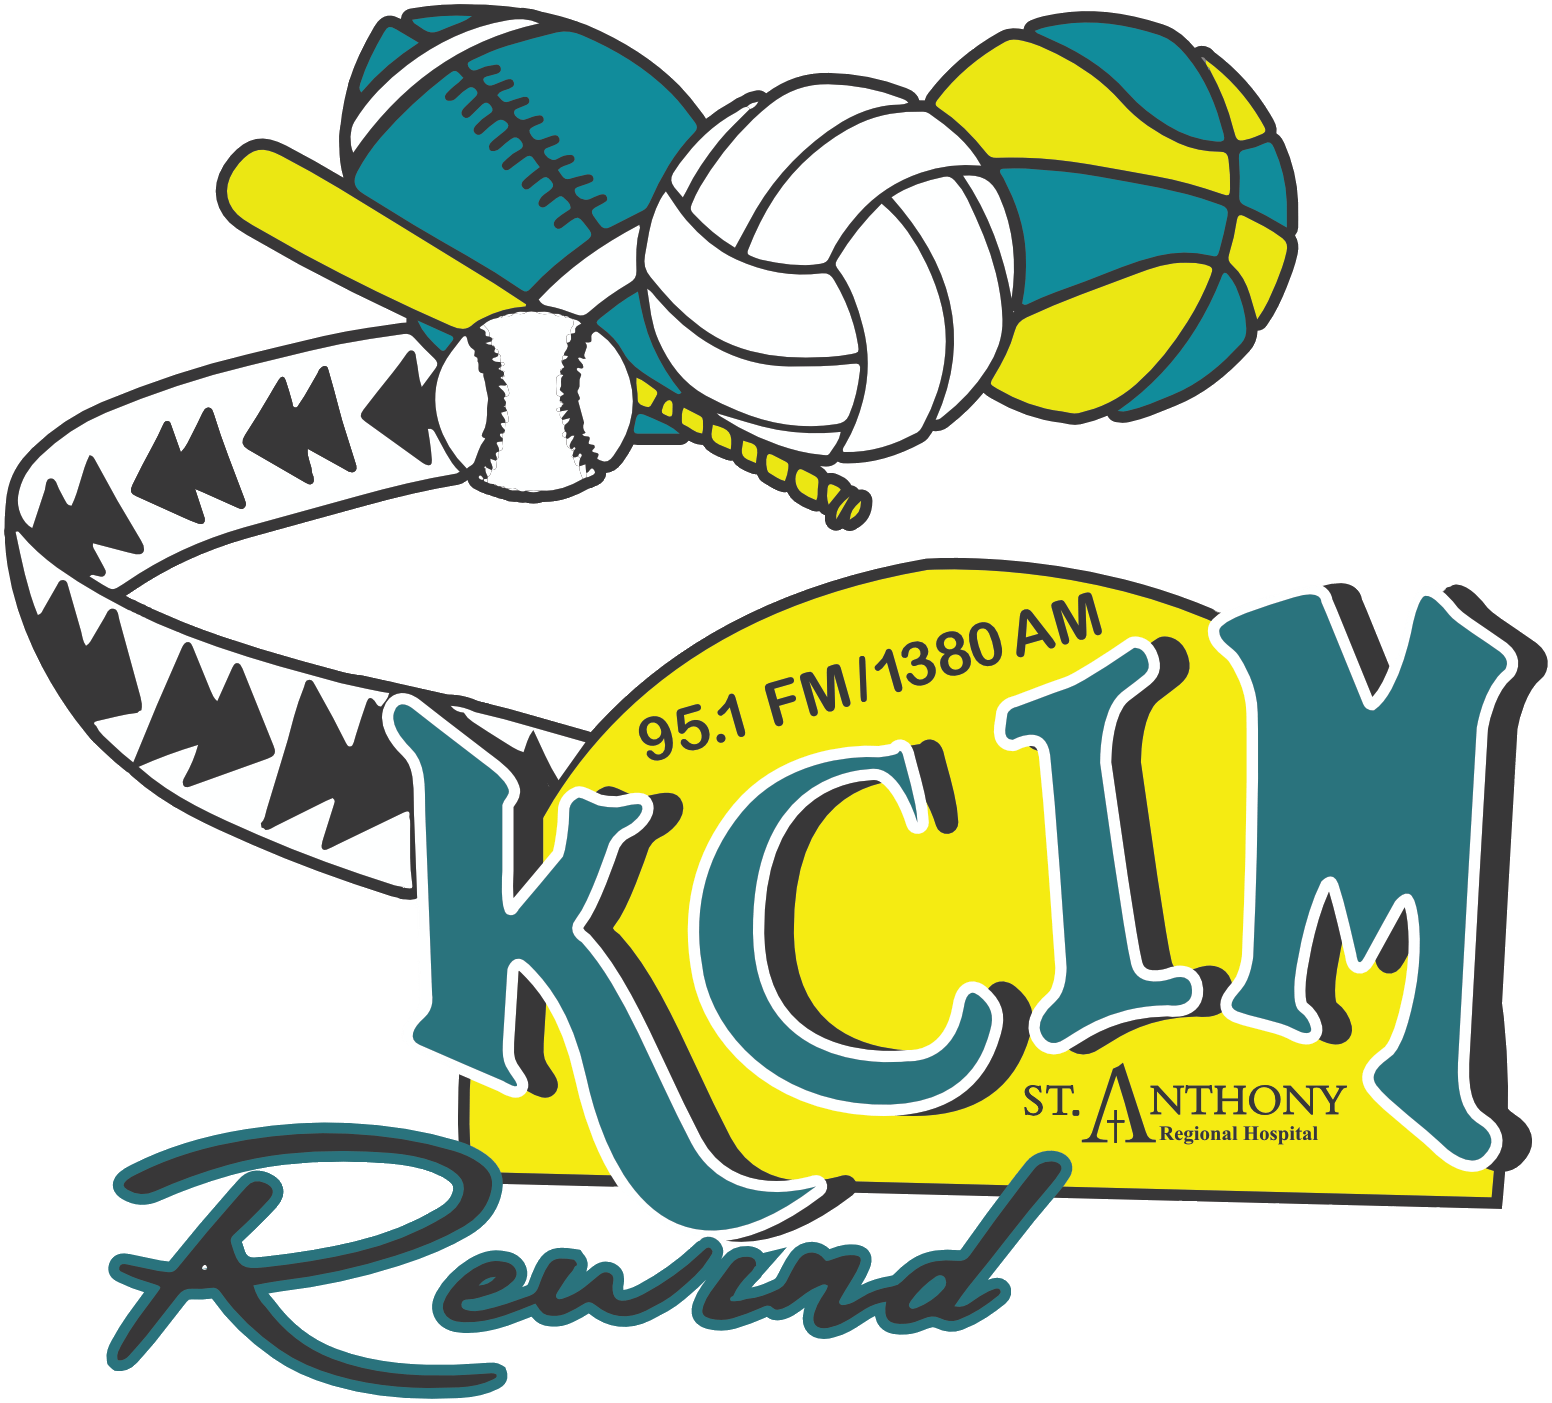 kcim-rewind-sports-logo